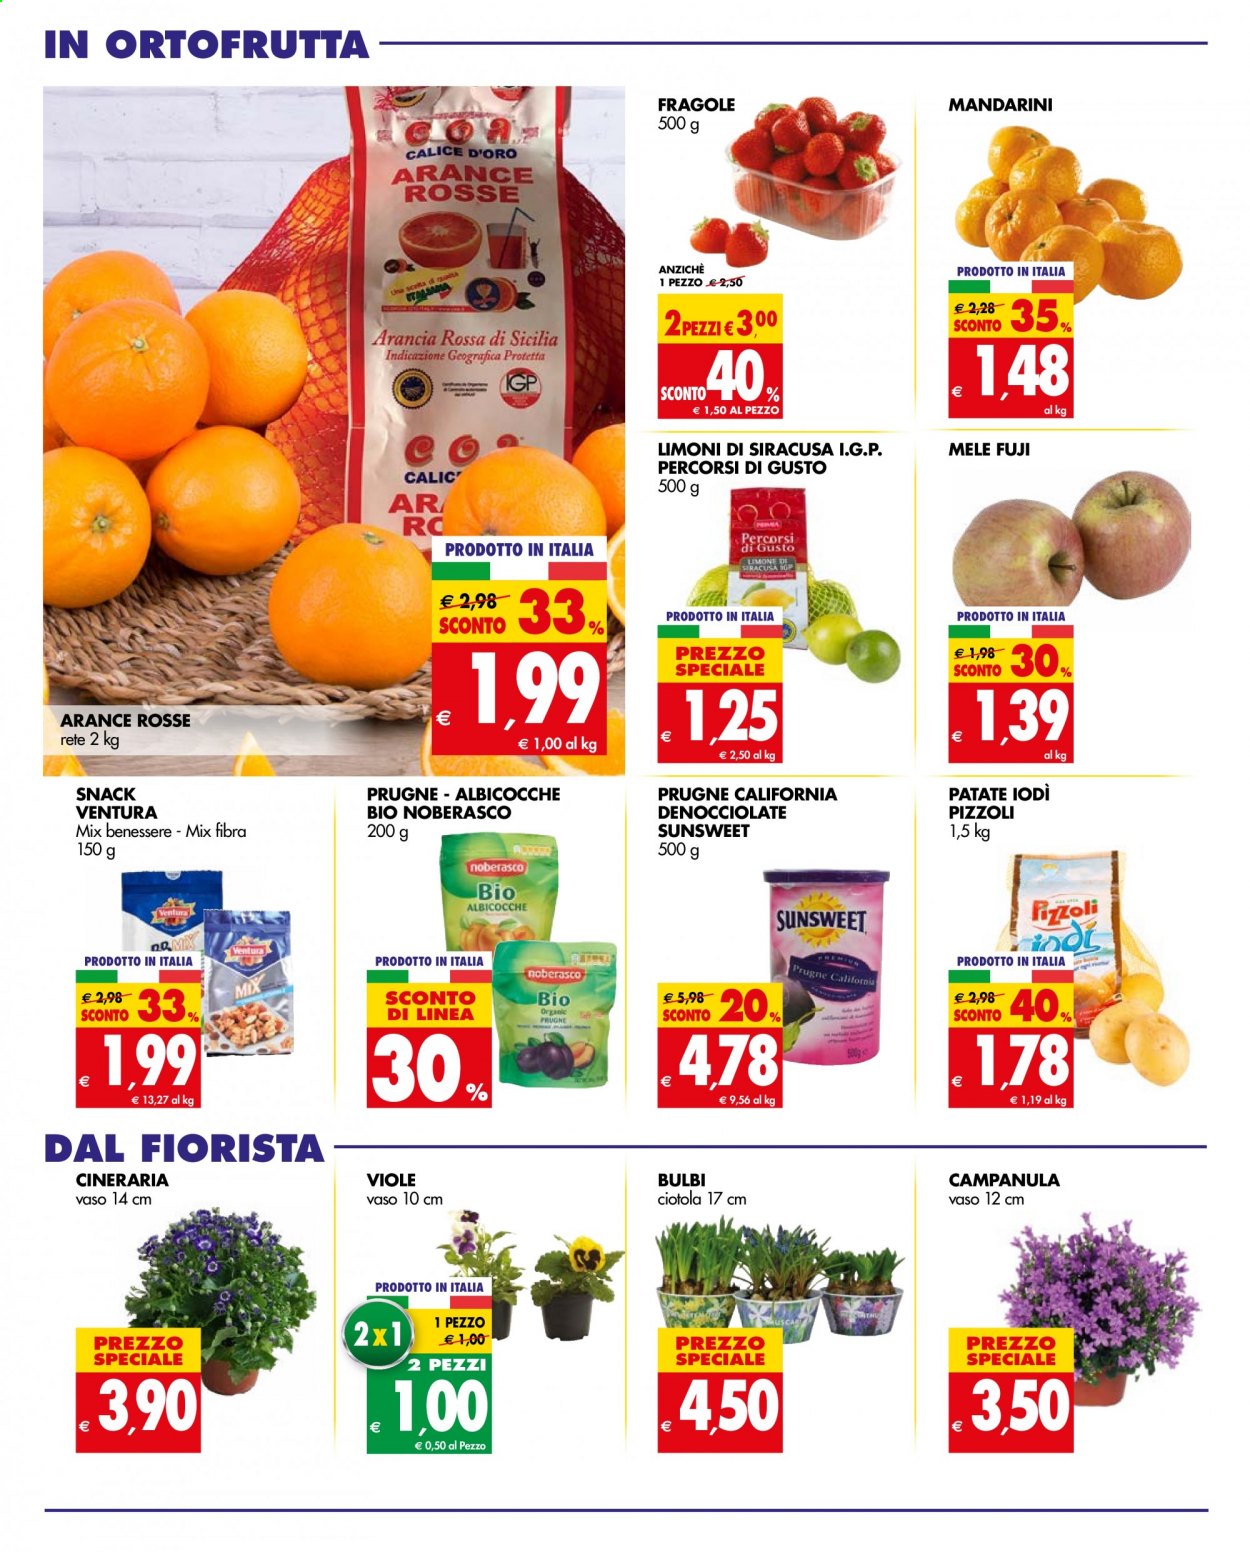 thumbnail - Volantino Tigros - 24/2/2021 - 9/3/2021 - Prodotti in offerta - patate, mele, limoni, albicocche, arance, fragole, prugne, mandarini, ciotola. Pagina 6.